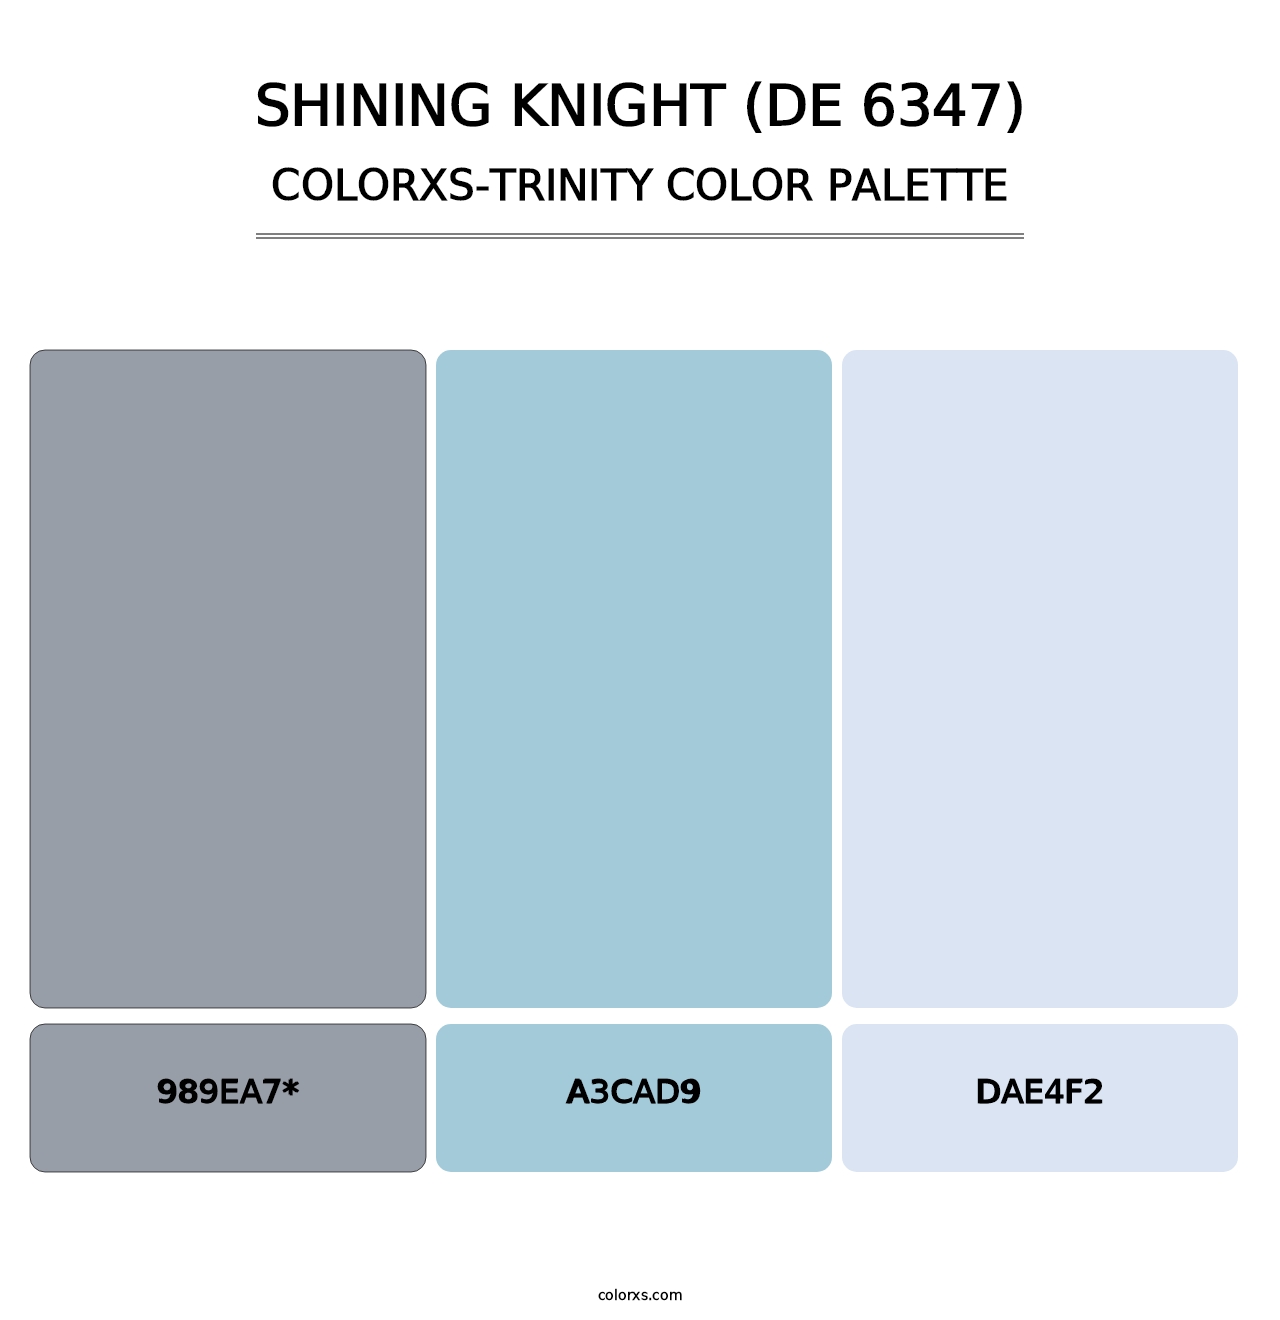 Shining Knight (DE 6347) - Colorxs Trinity Palette